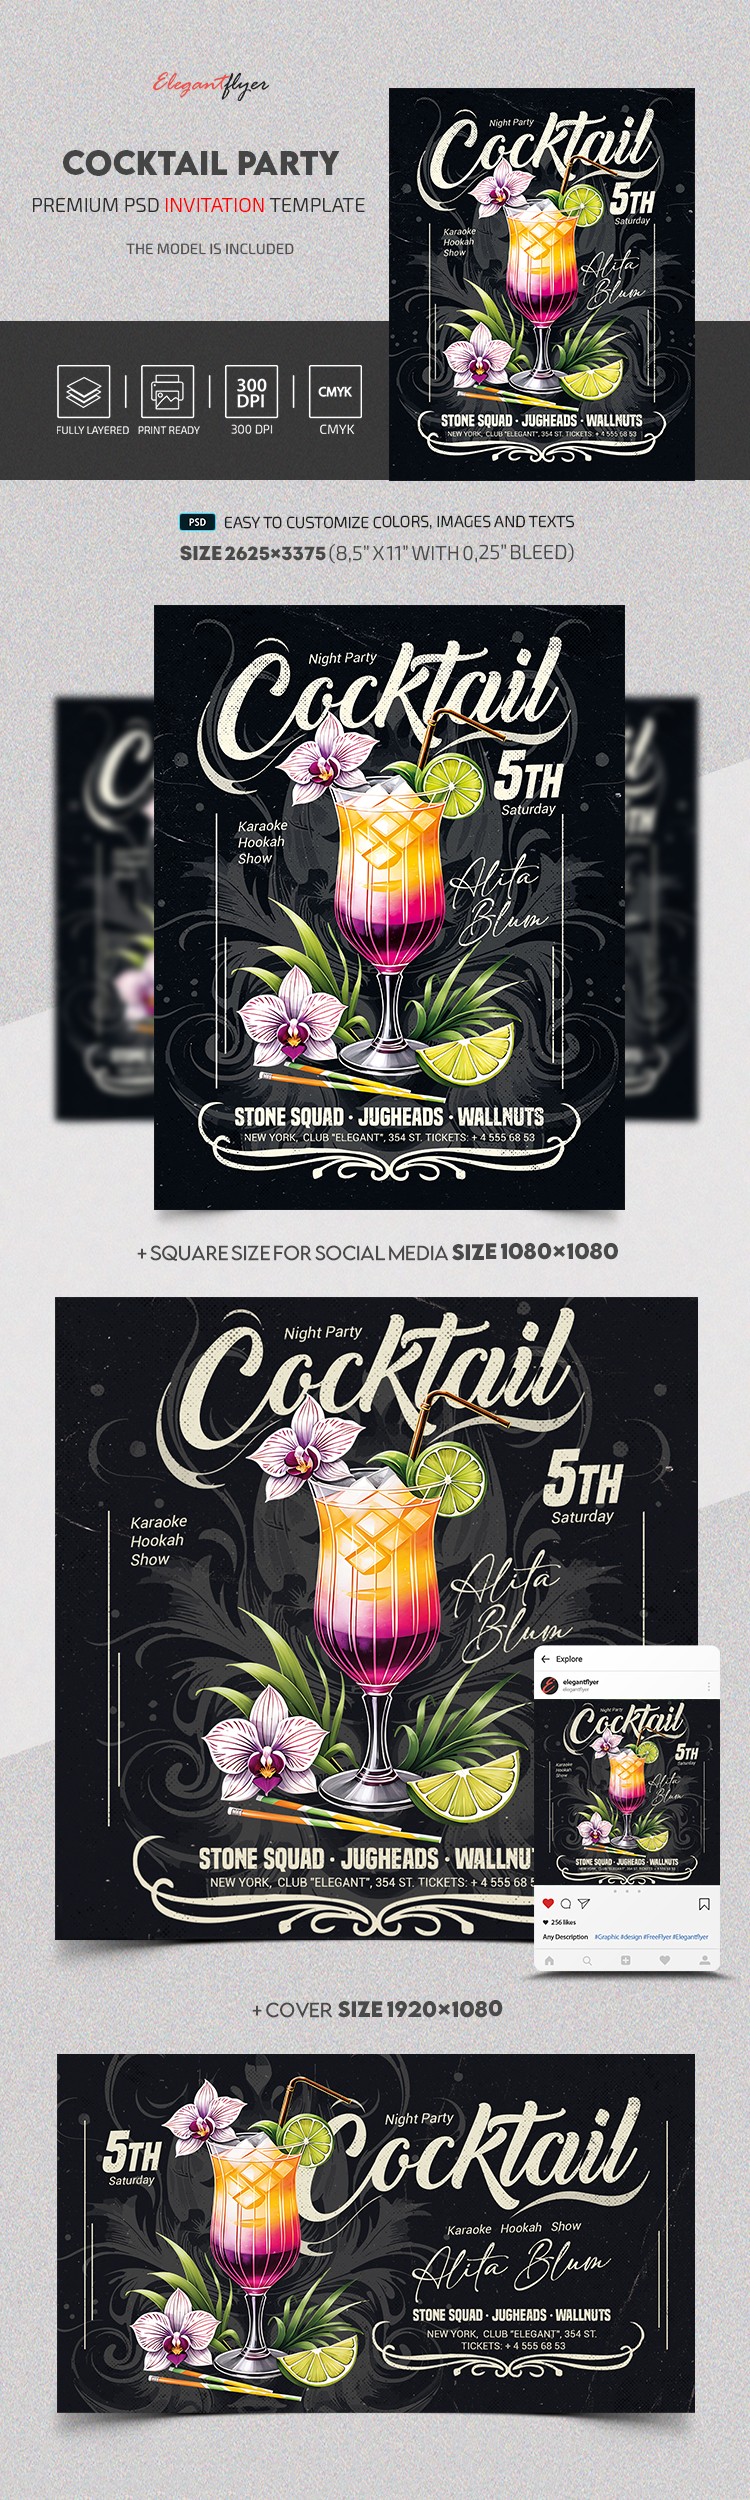 Cocktailparty by ElegantFlyer